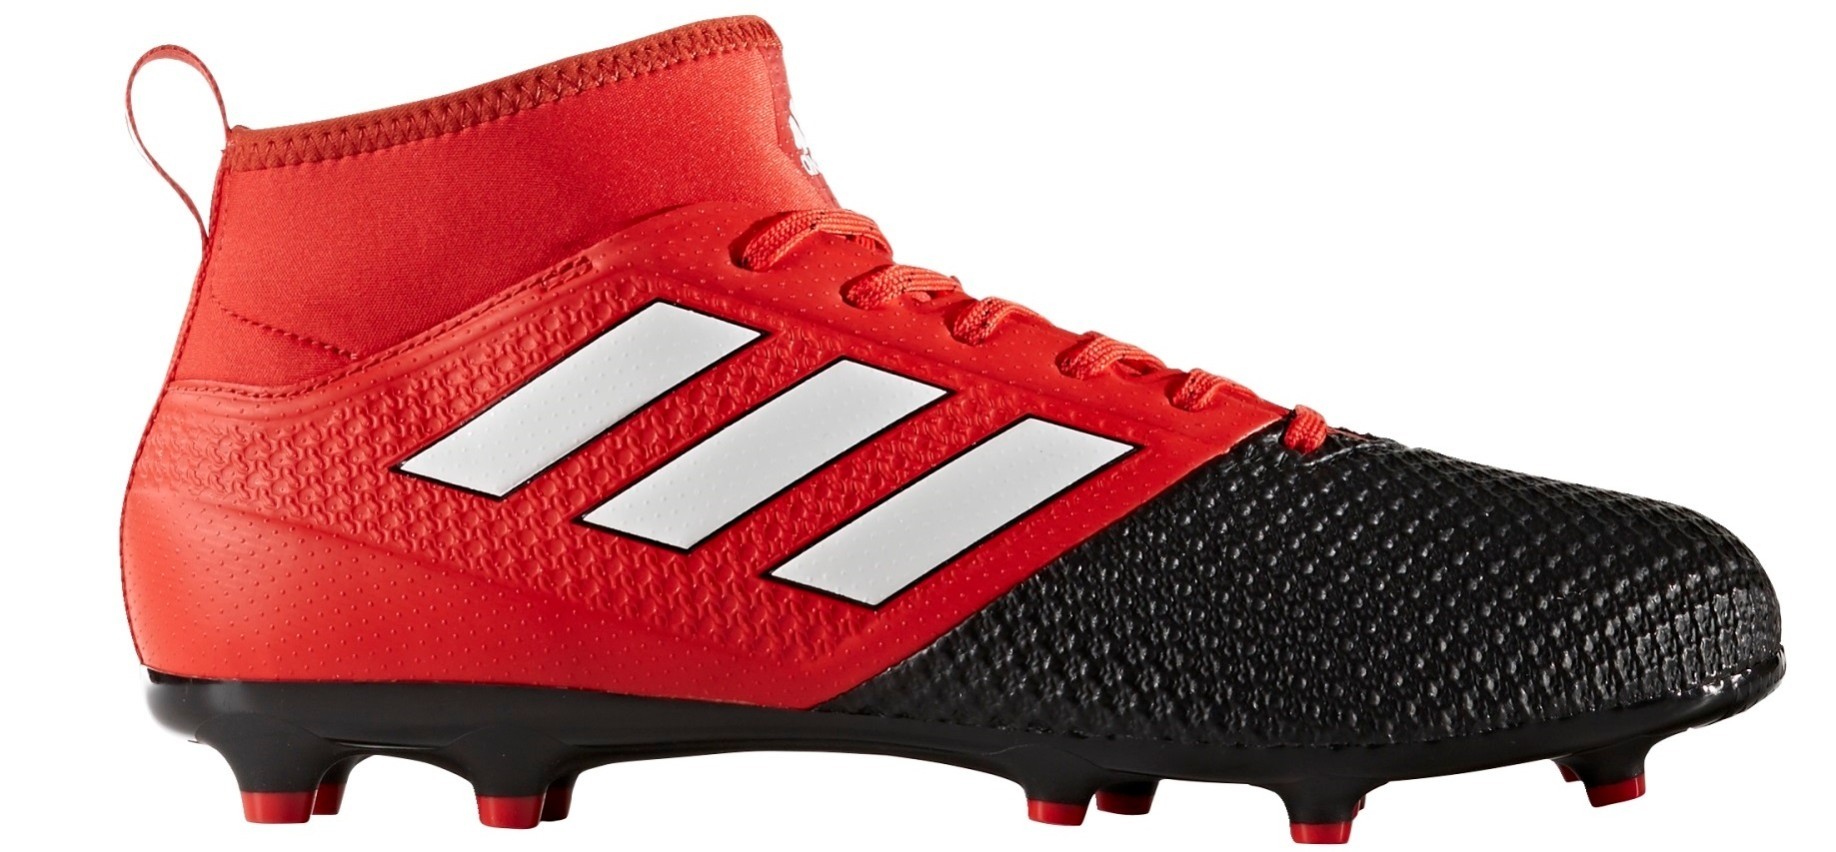 Botas de Fútbol Adidas Ace 17.3 Primemesh FG Rojo Límite Pack colore rojo negro - Adidas -